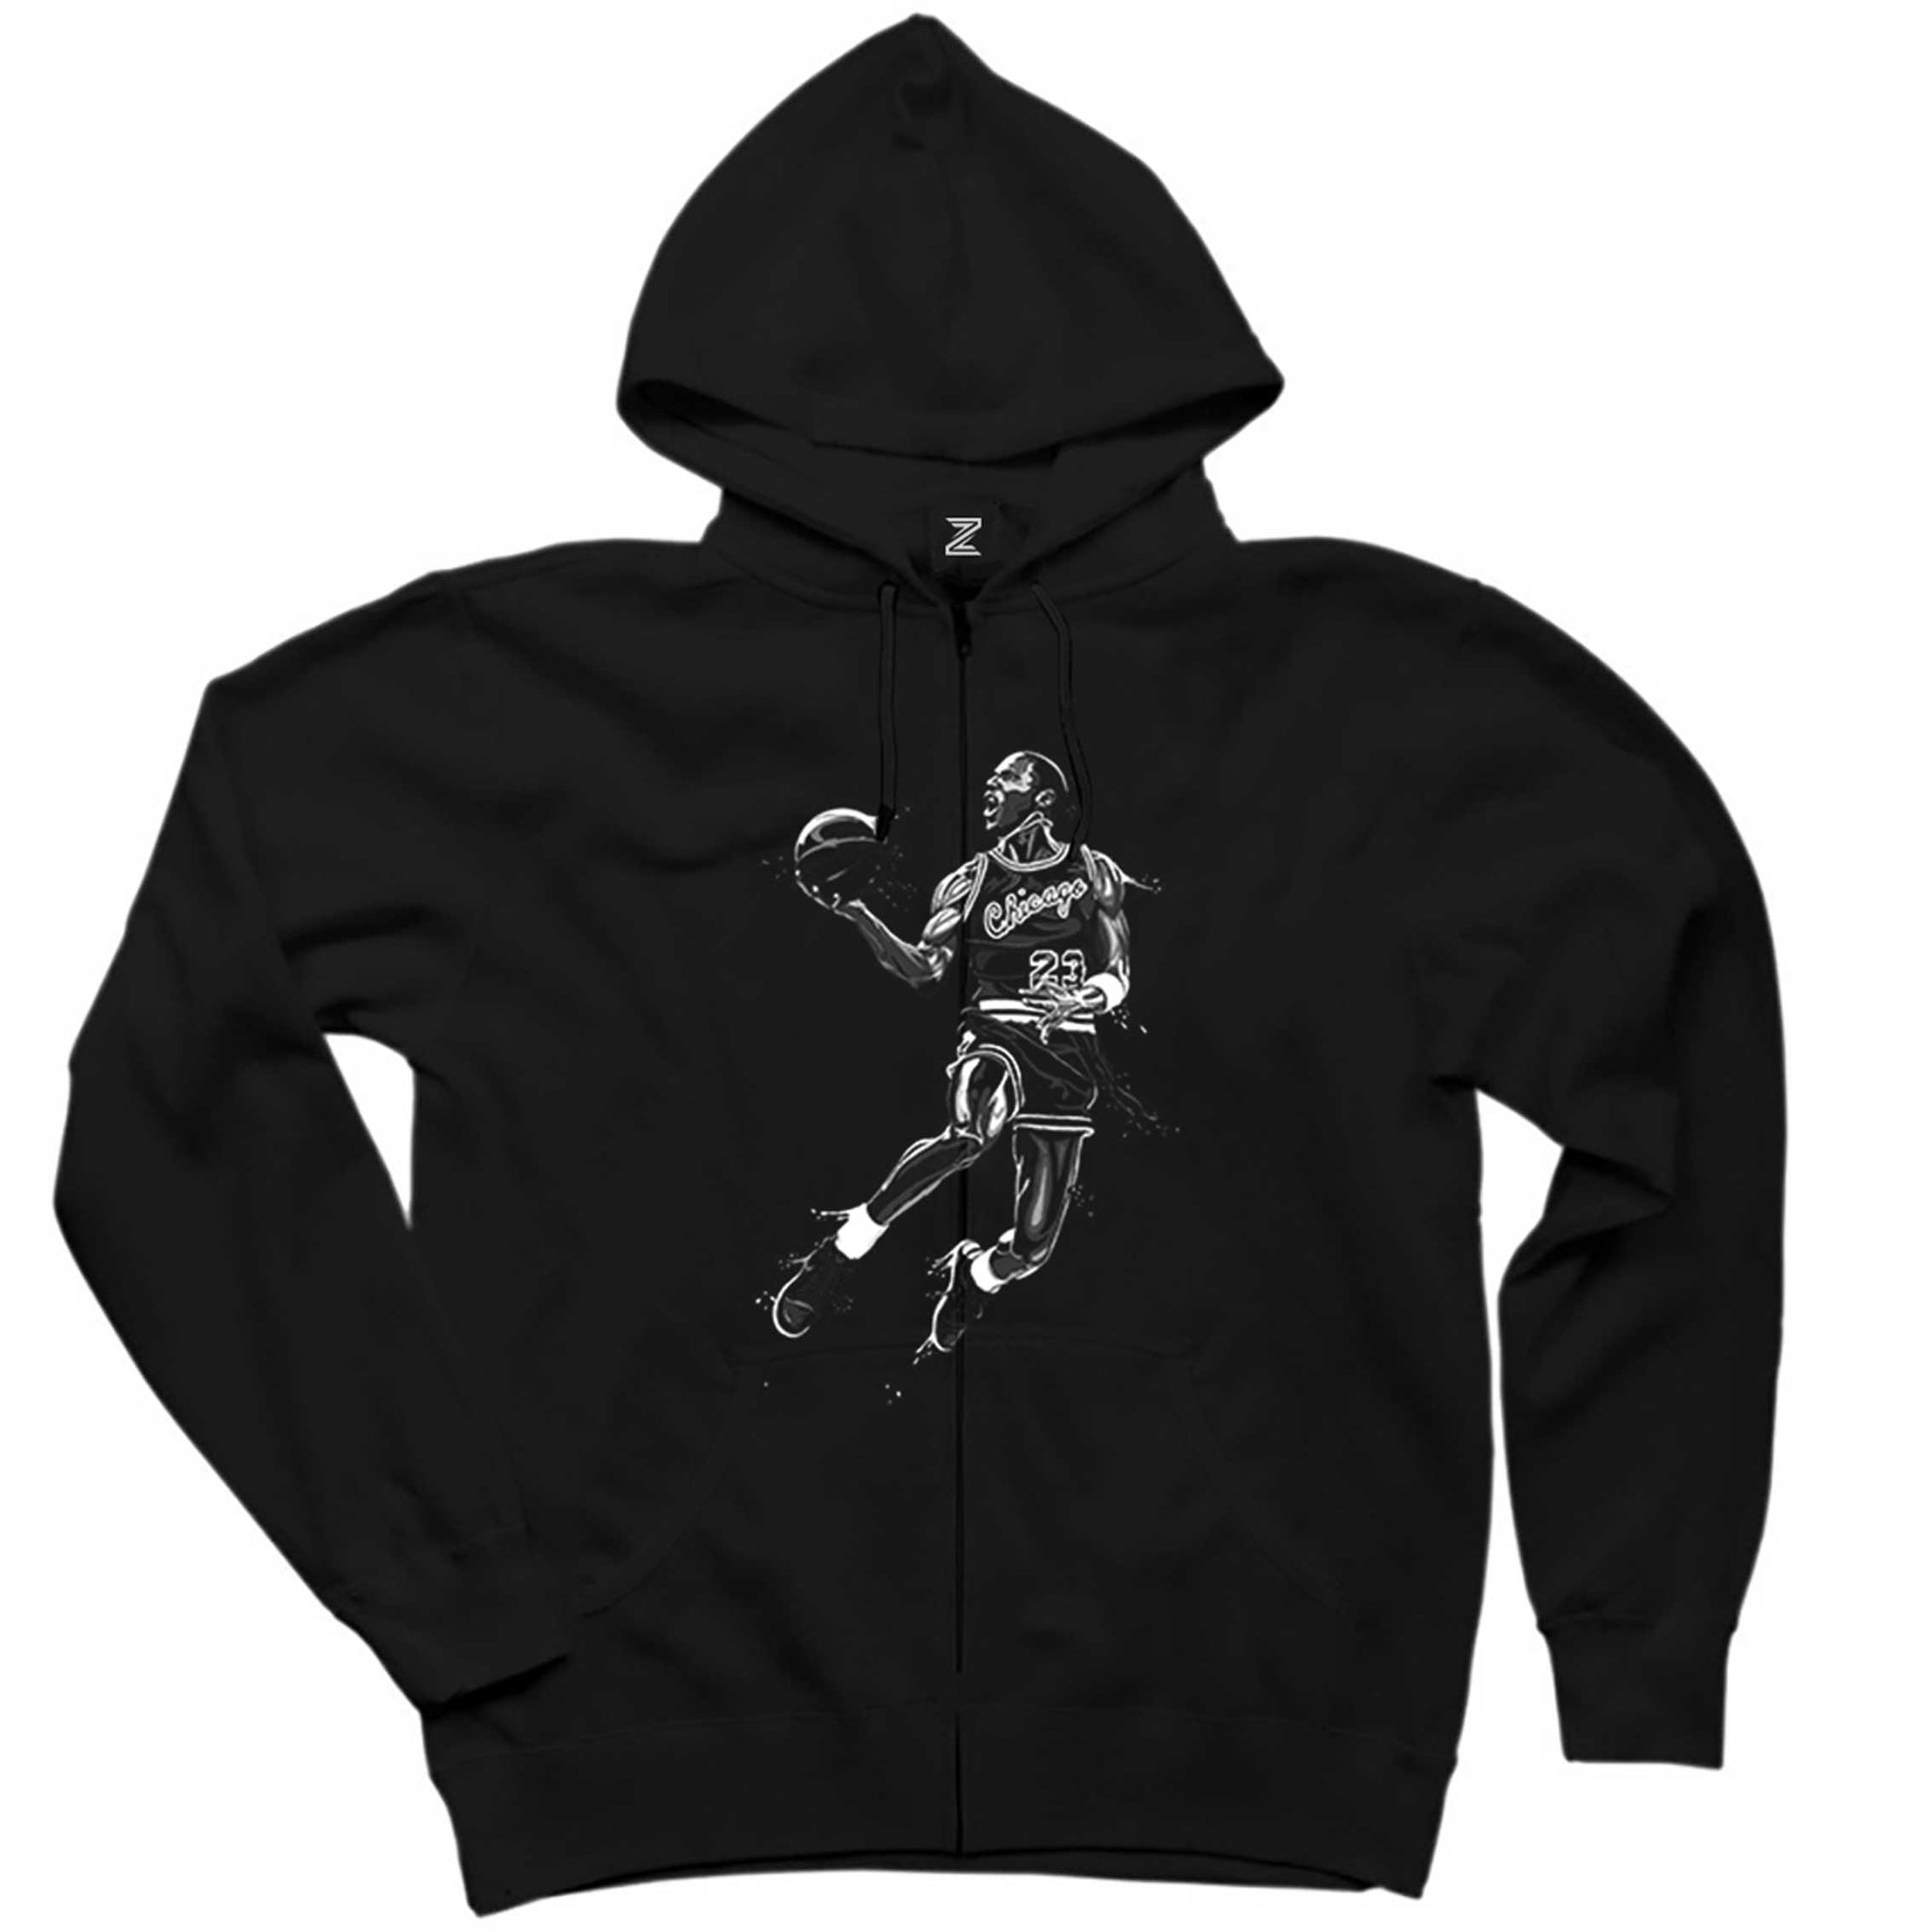 Michael Jordan Black Siyah Fermuarlı Kapşonlu Sweatshirt